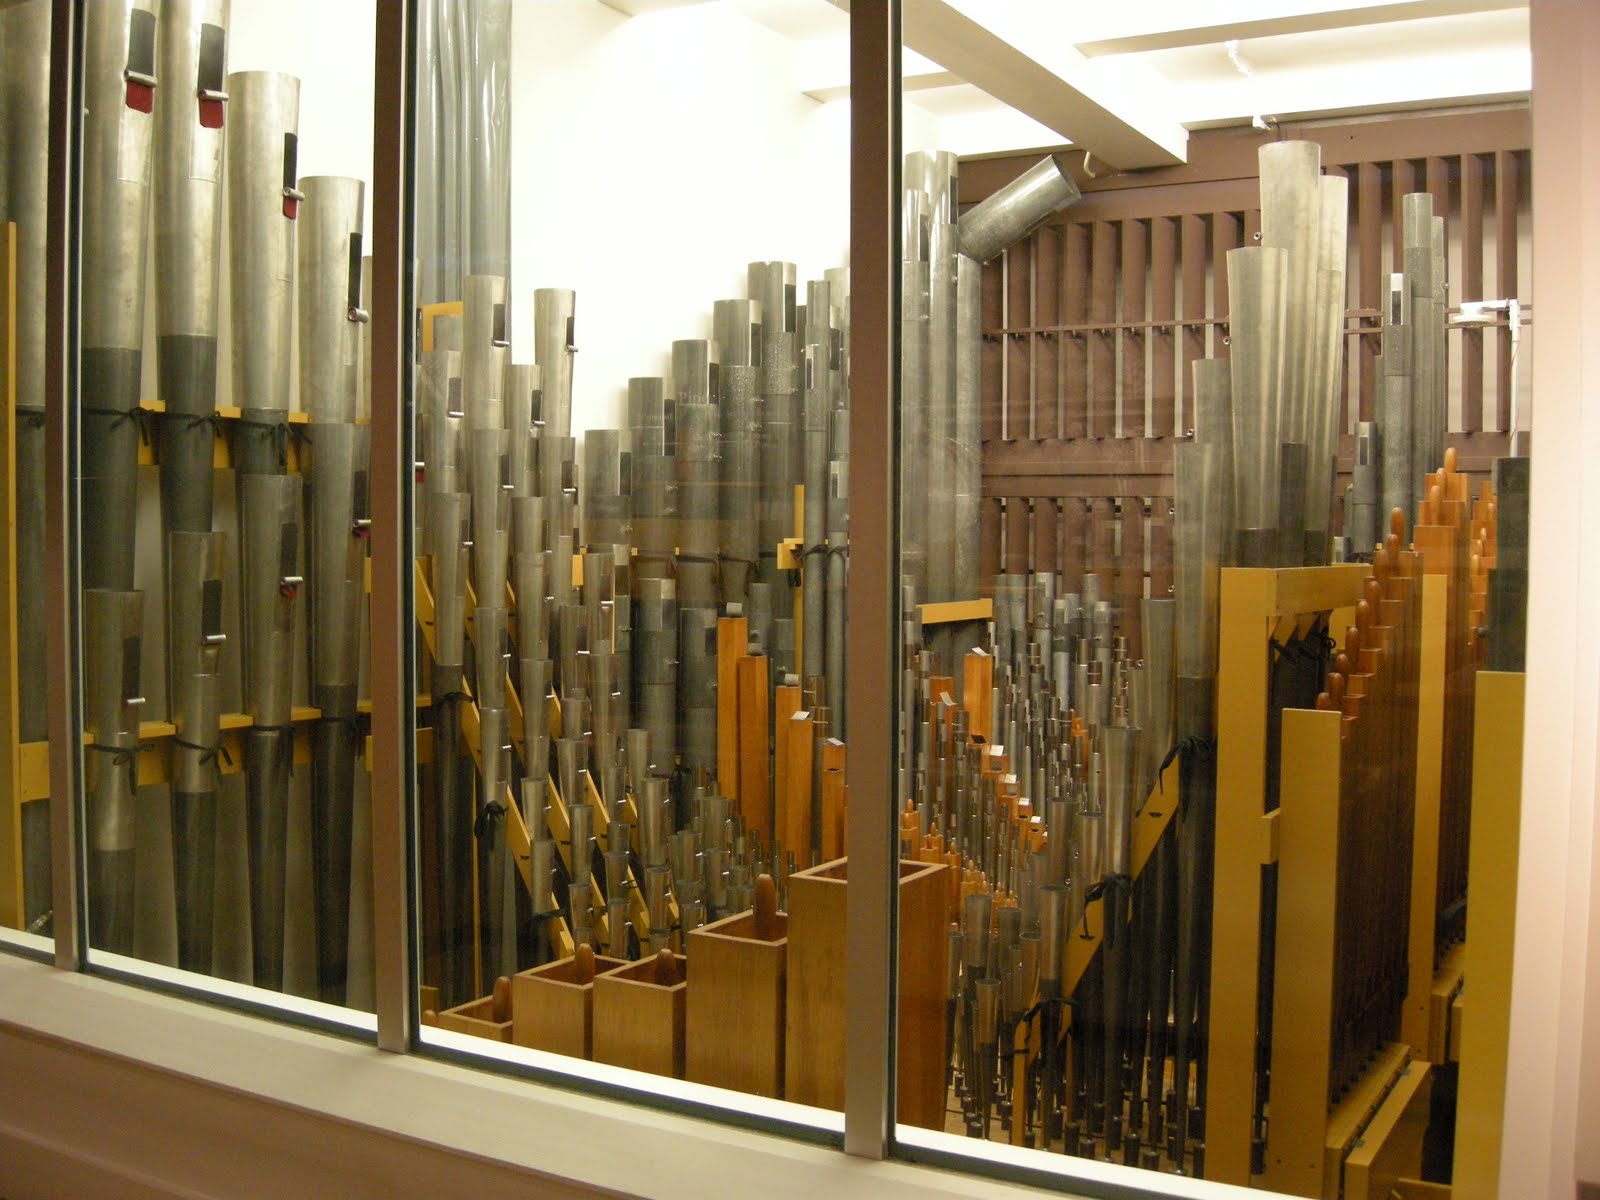 Aeolian Opus 1726 Pipe Organs Of Philly